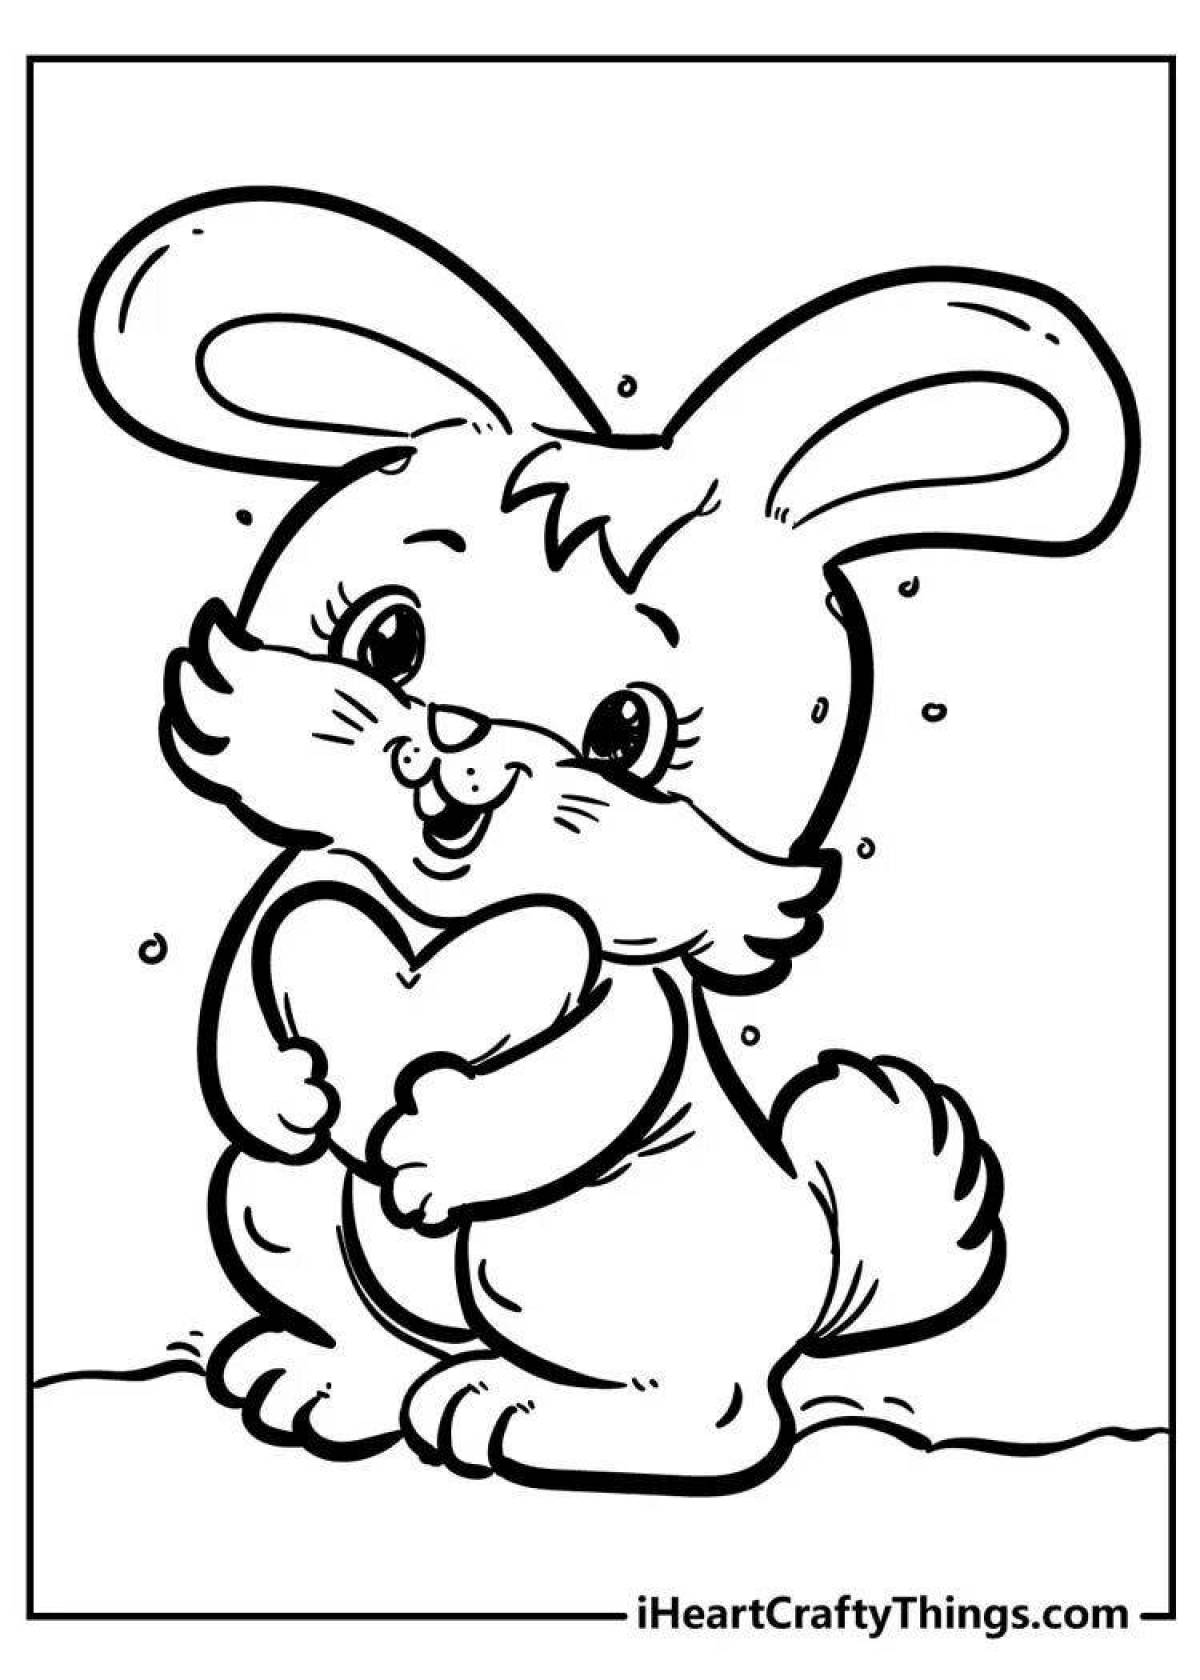 Joyful bunny coloring book with heart